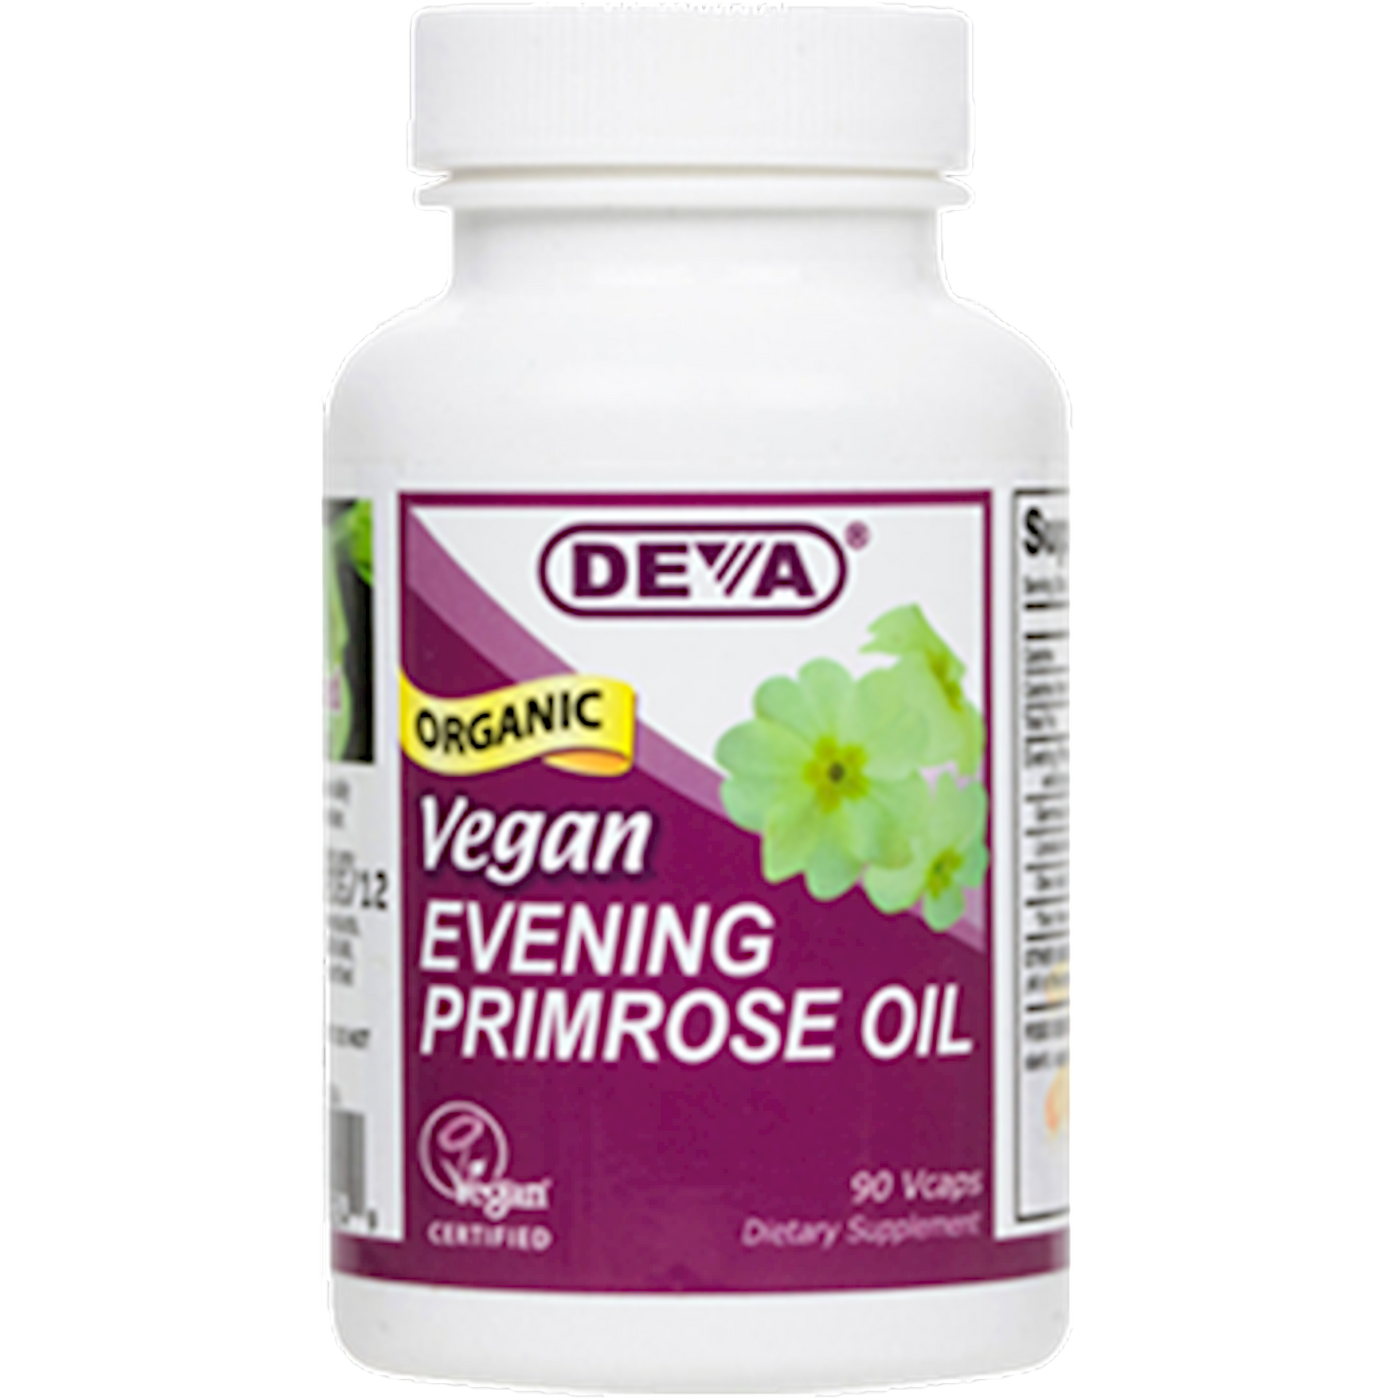 Vegan Evening Primrose Oil 90 vcaps Curated Wellness